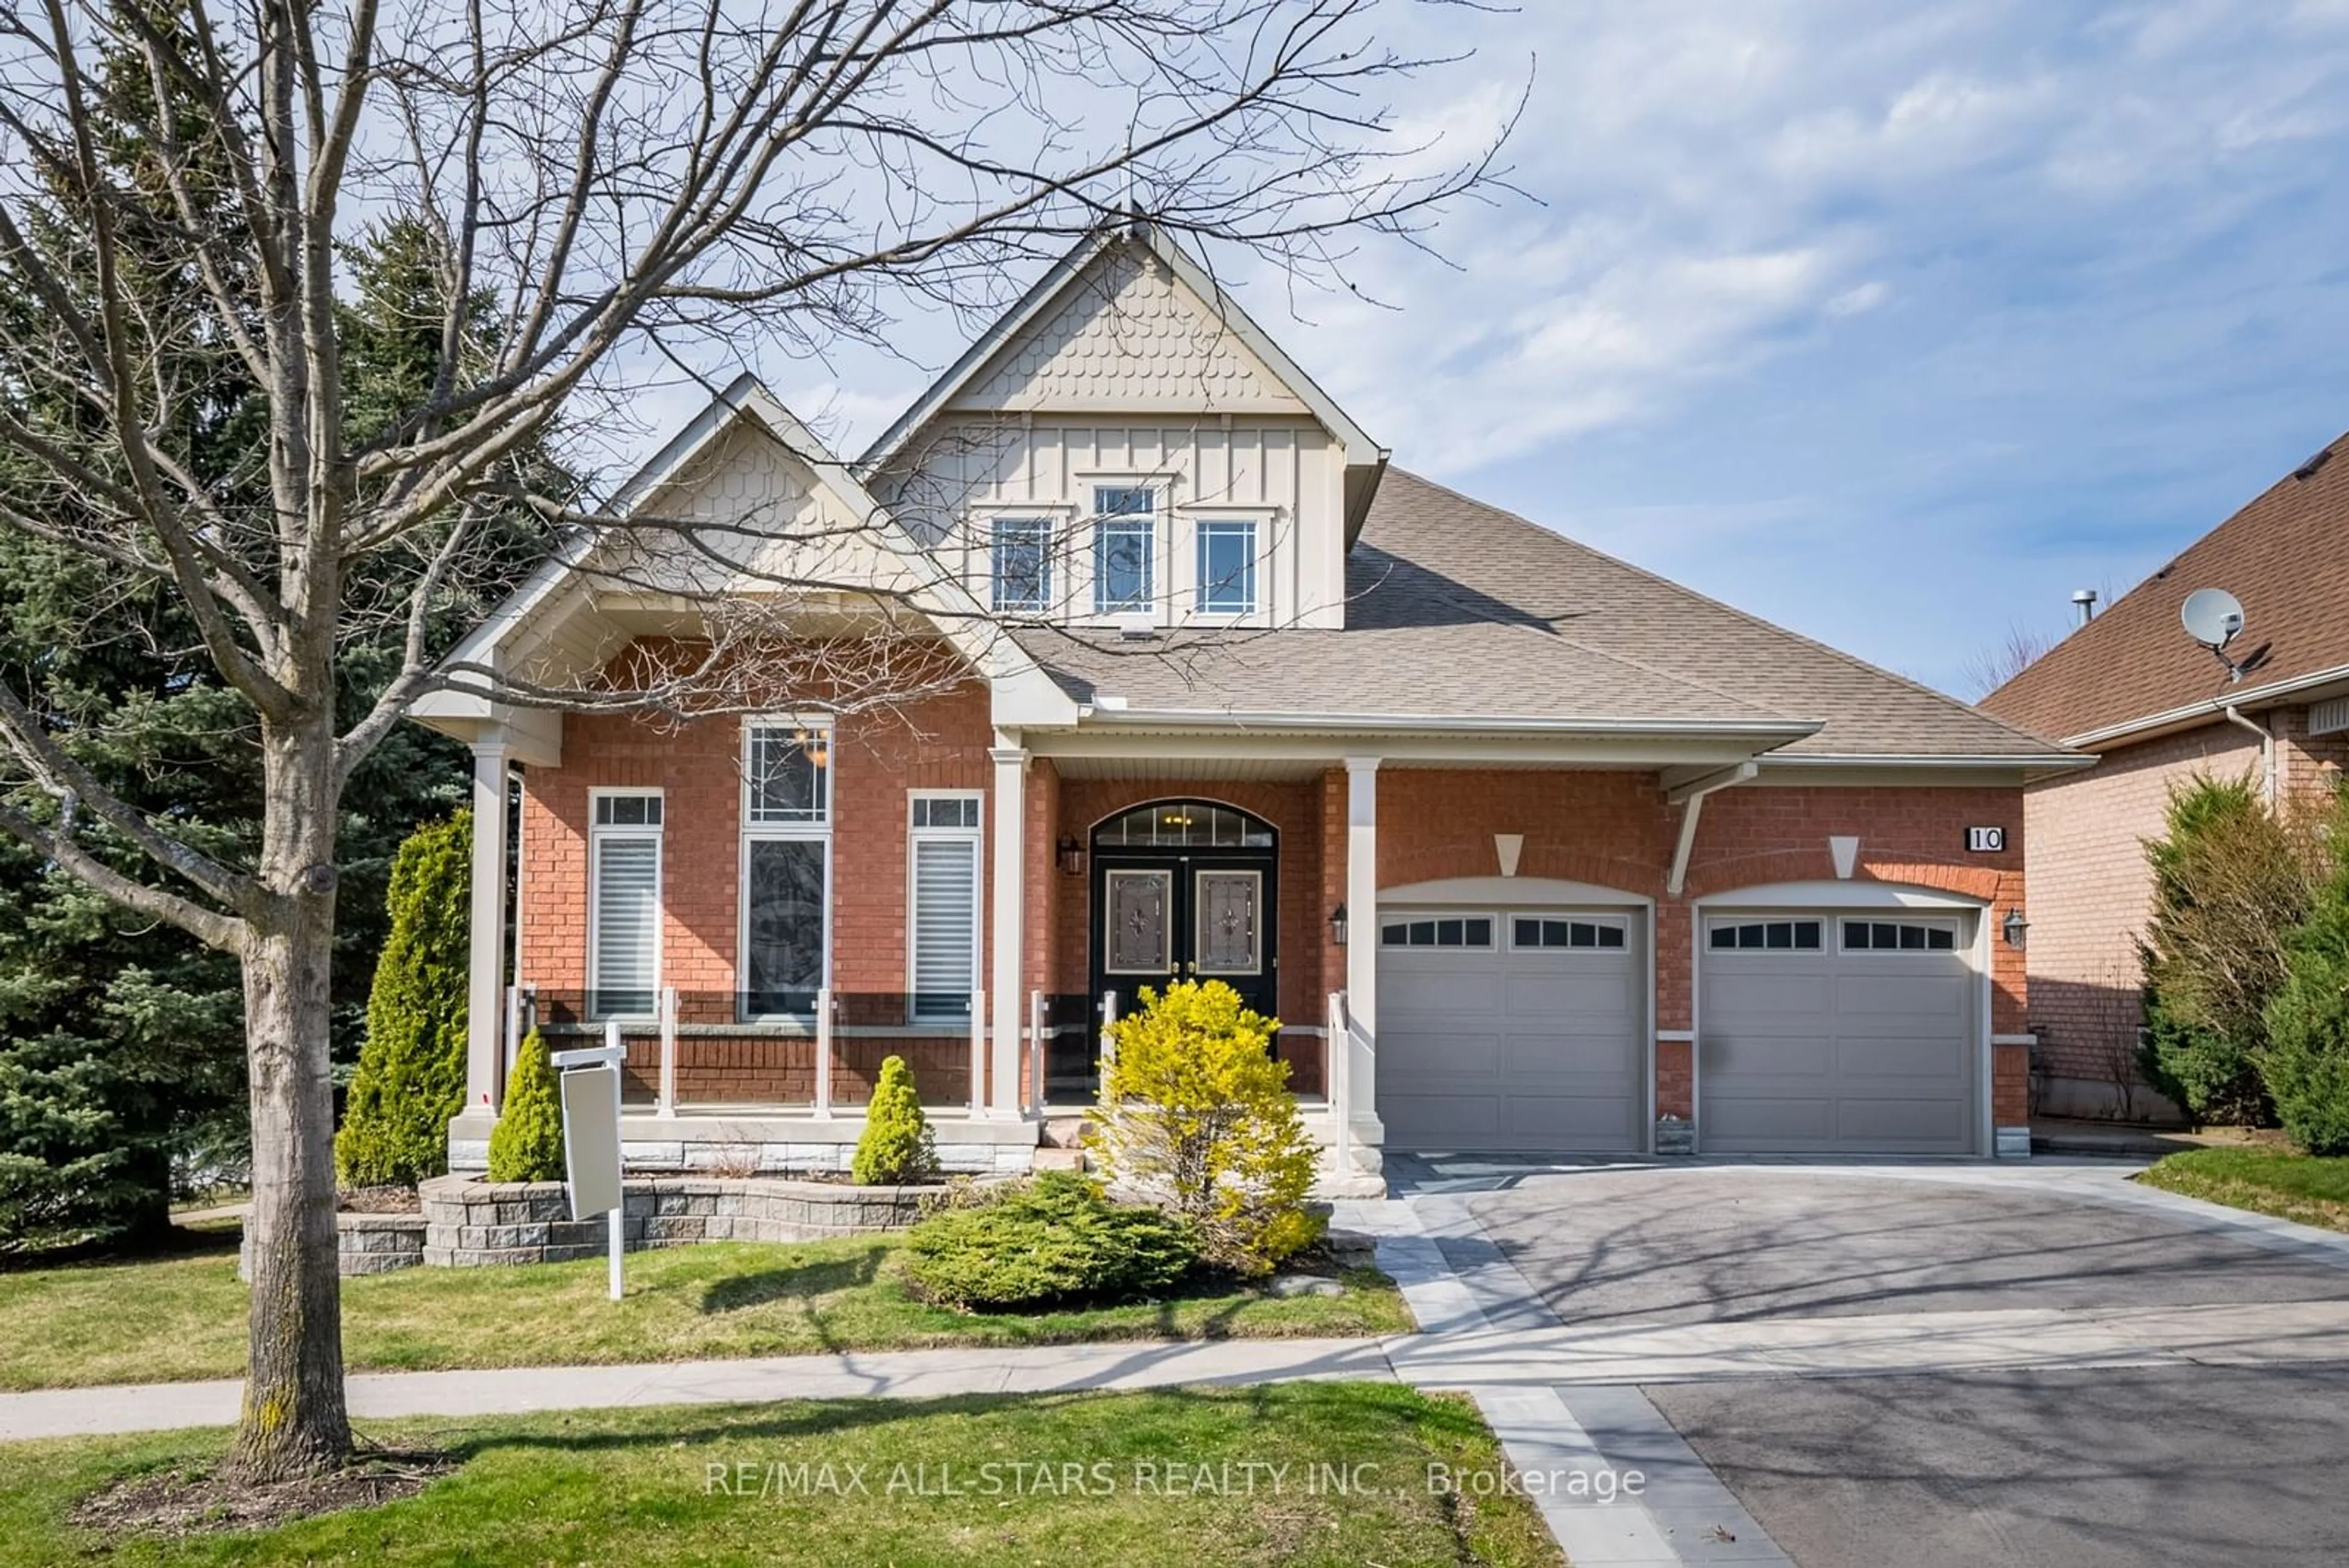 Home with brick exterior material for 10 Keller Lane, Uxbridge Ontario L9P 1Z4